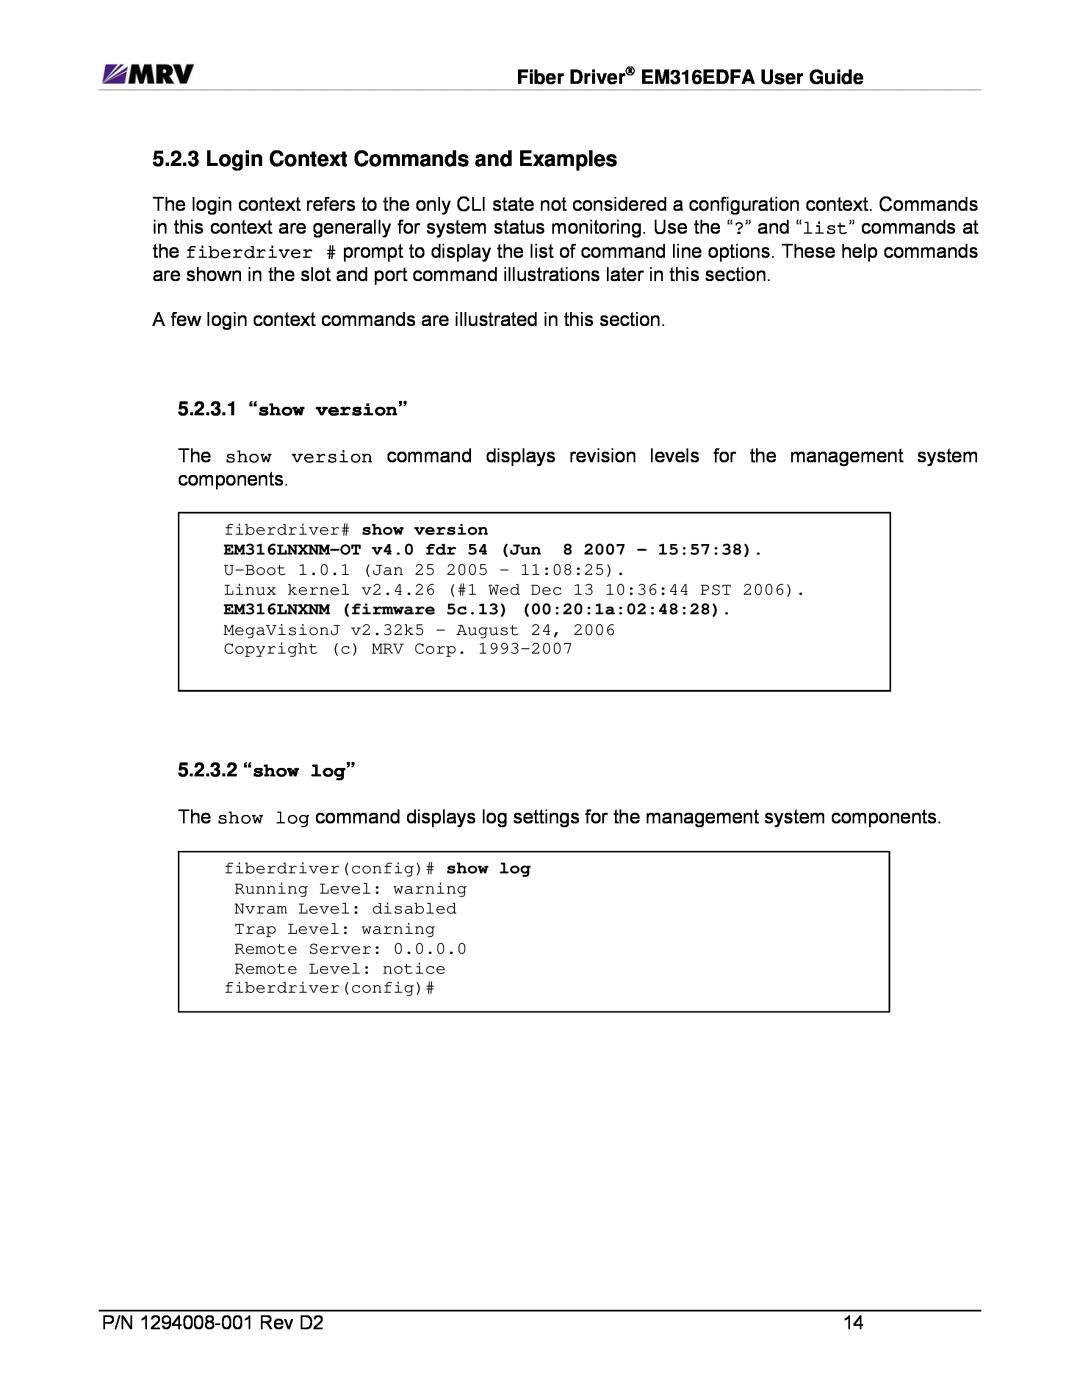 MRV Communications EM316EDFA-LPR manual Login Context Commands and Examples, 5.2.3.1“show version”, 5.2.3.2“show log” 